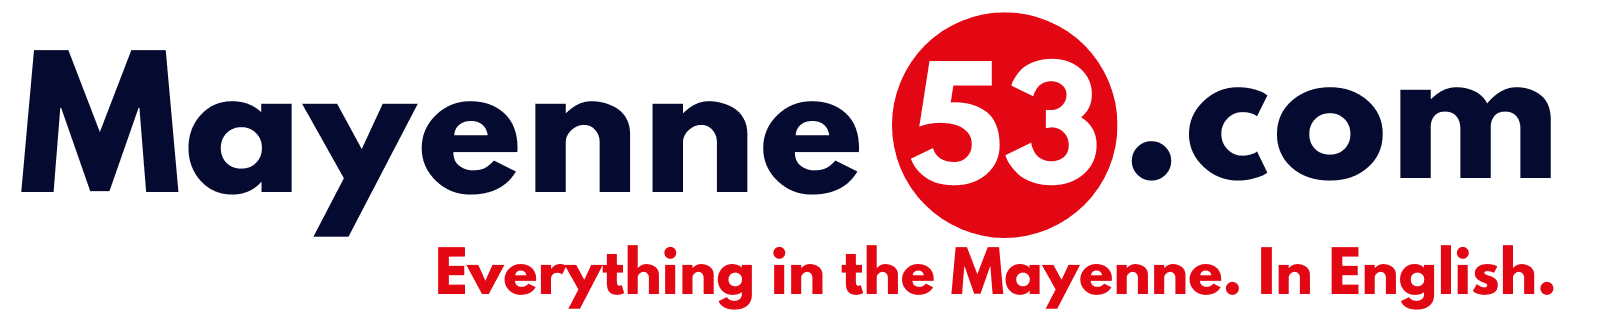 mayenne53 website logo